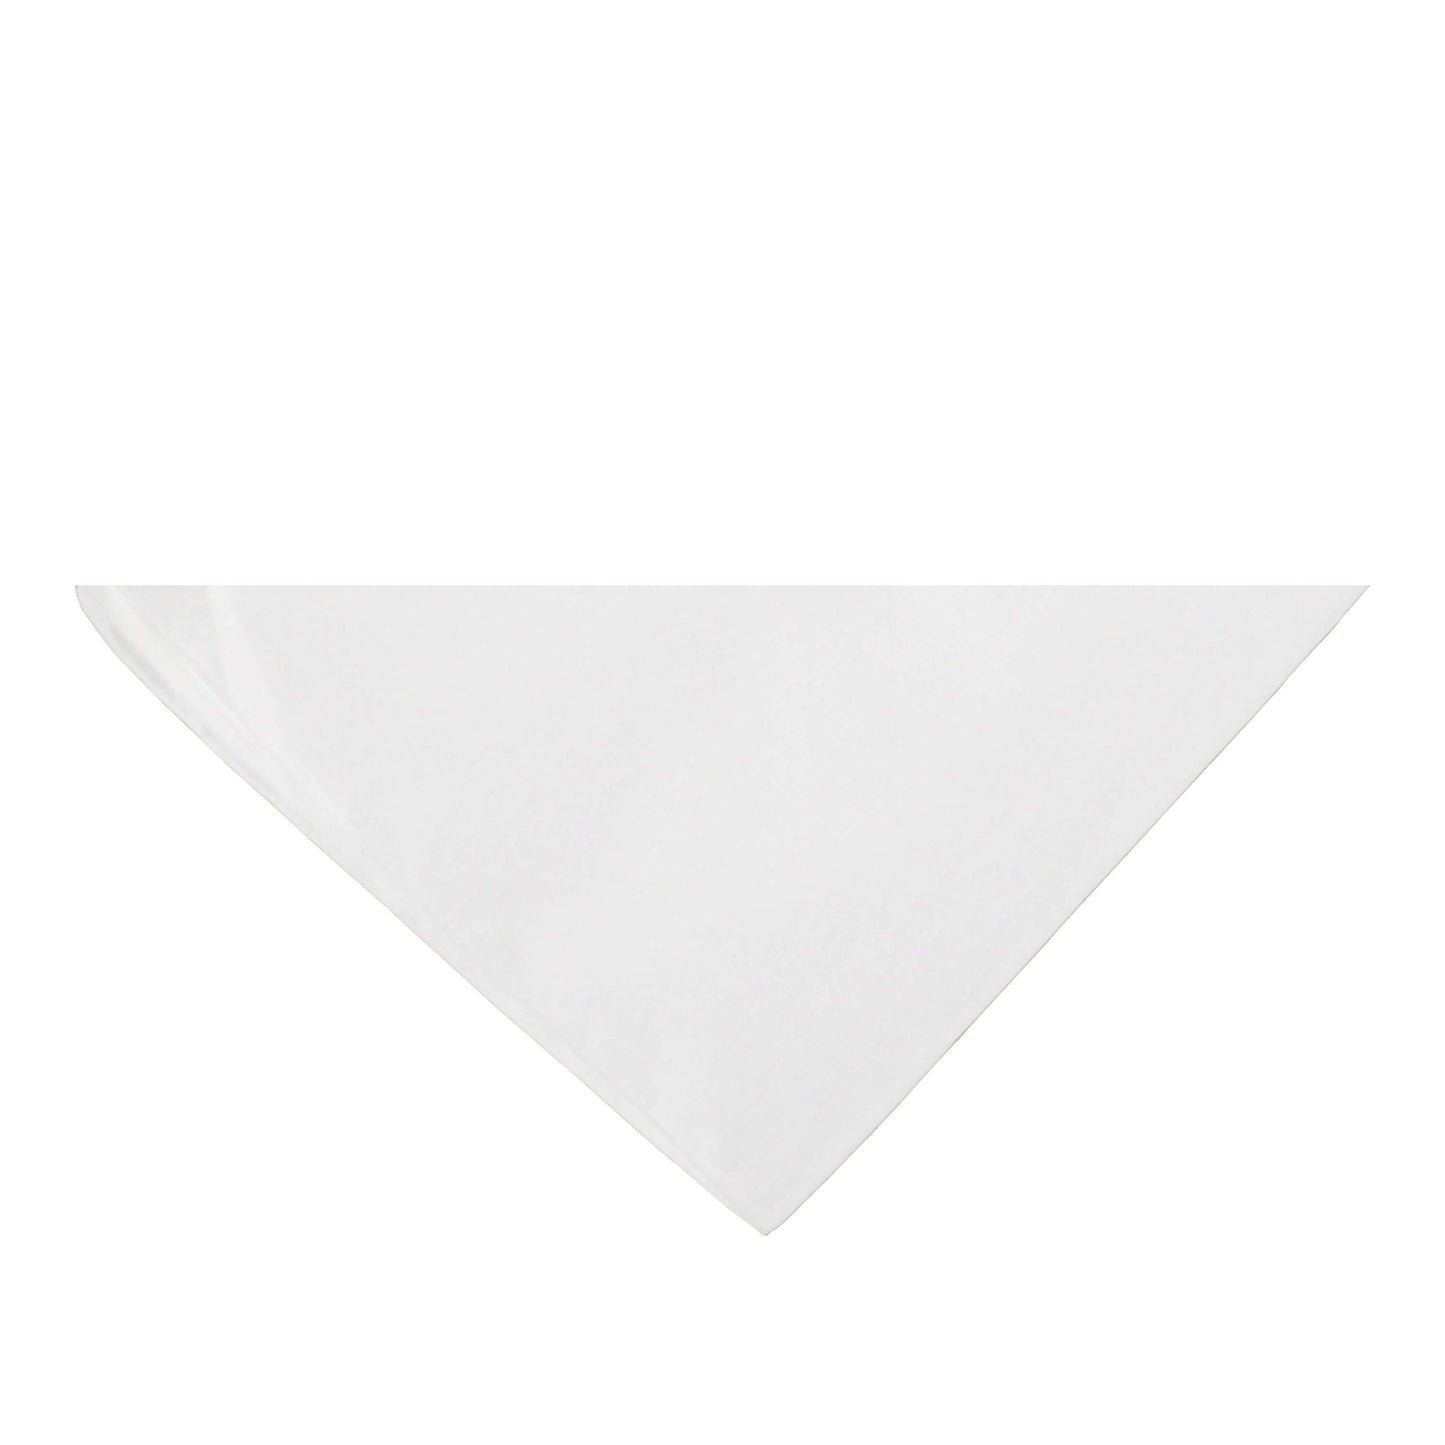 Mechaly Triangle Plain Bandanas - 6 Pack - Kerchiefs and Head Scarf